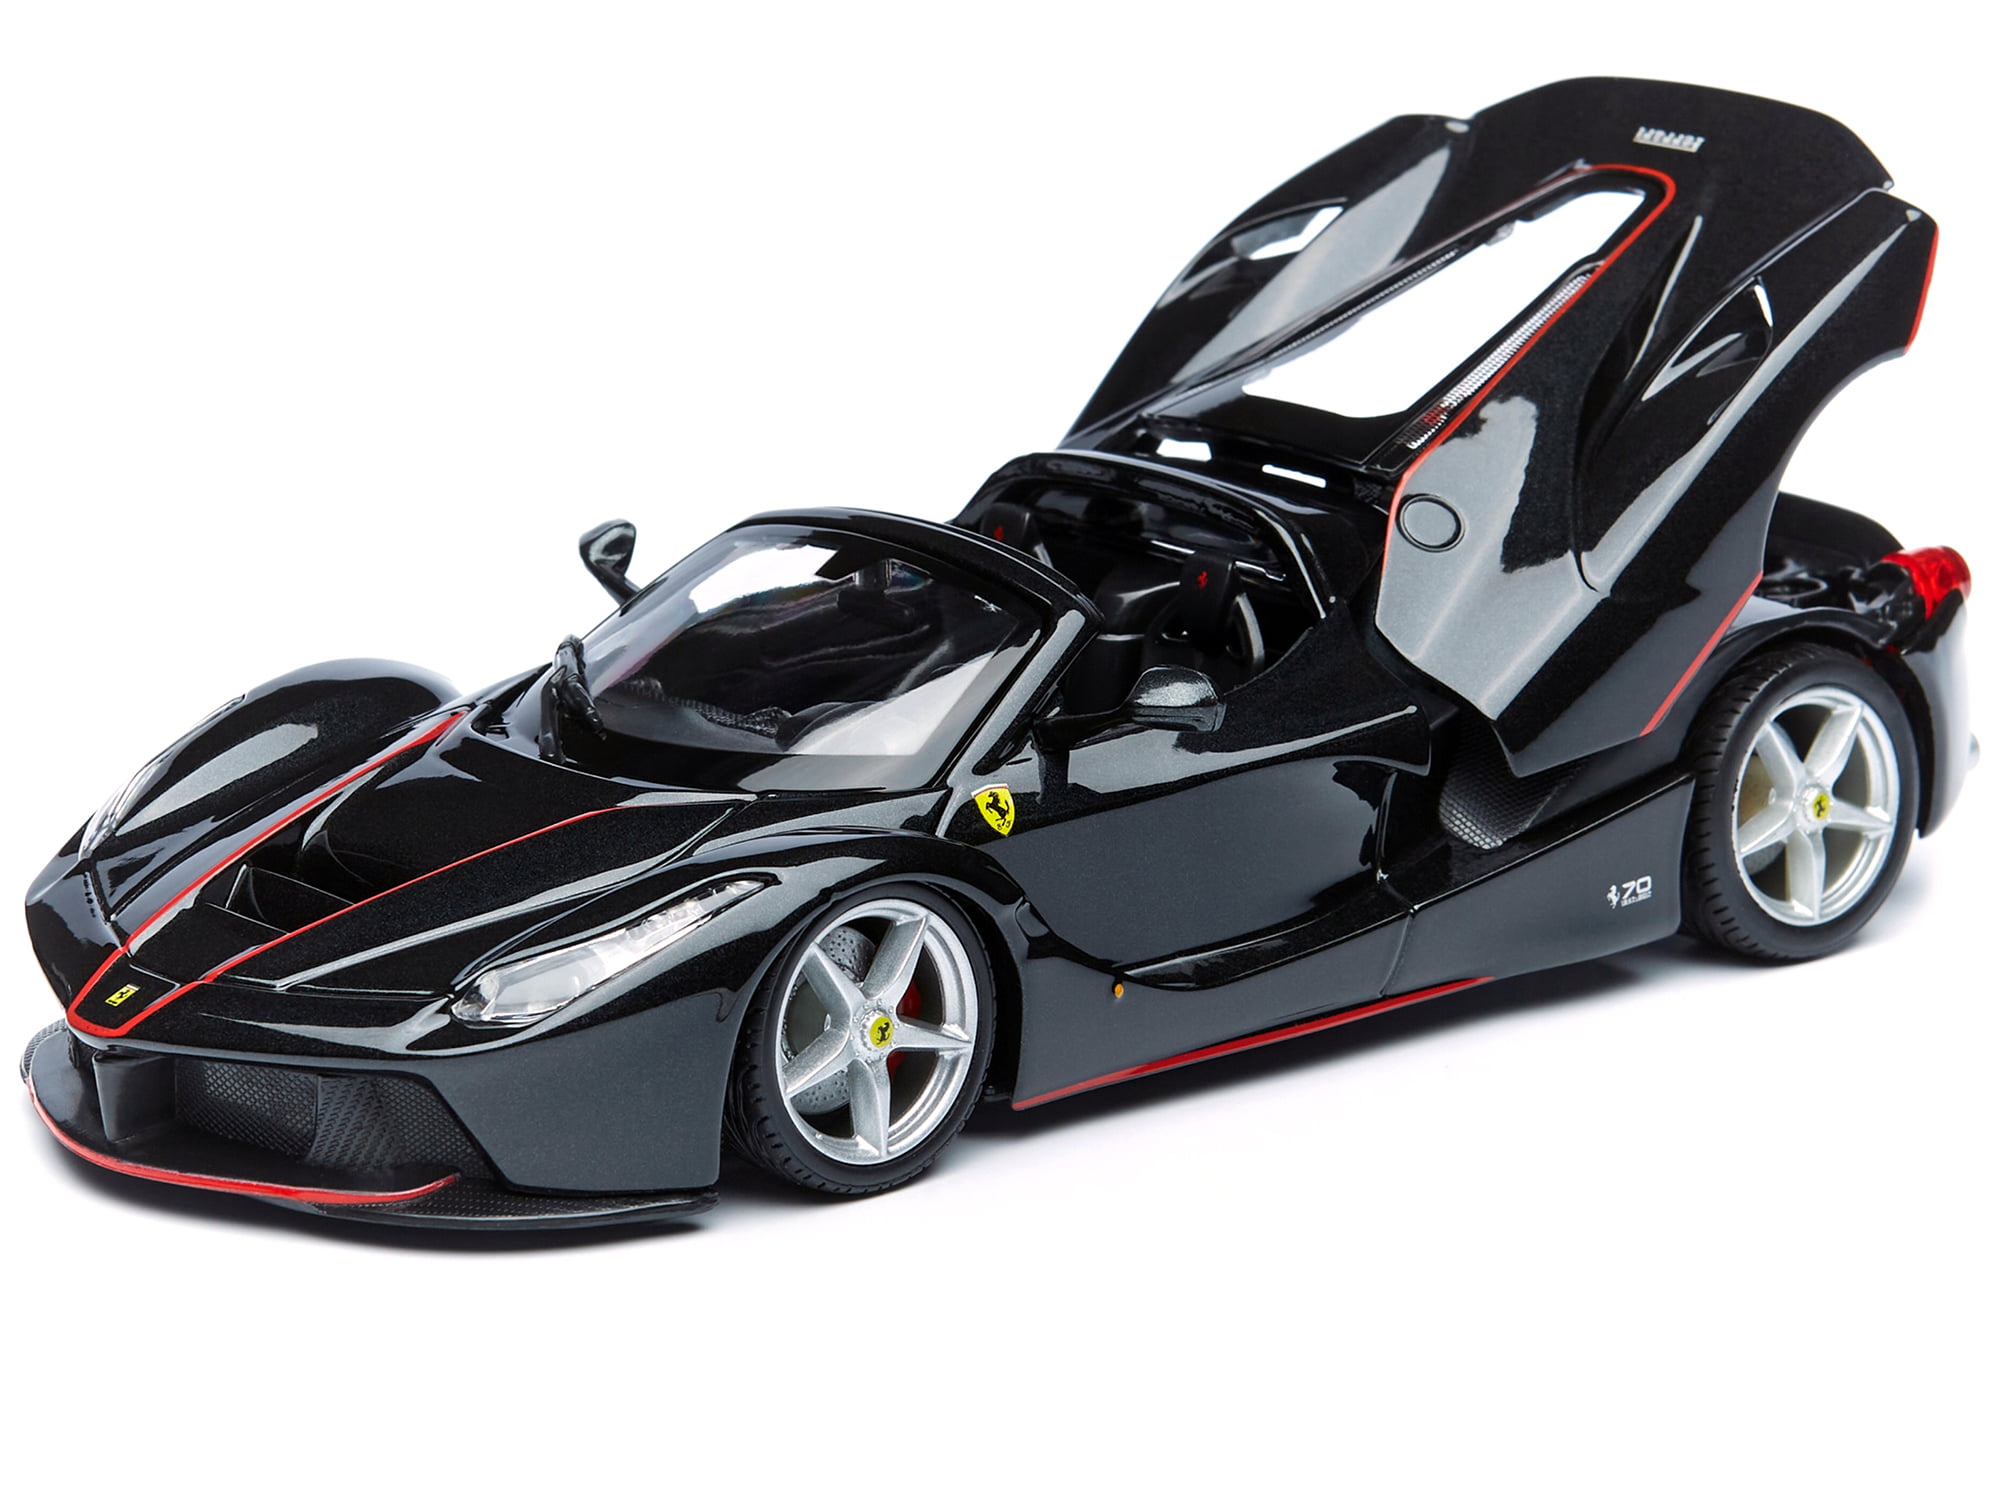 18-26022 - Bburago - 1:24 - Ferrari R&P - Black open LaFerrari